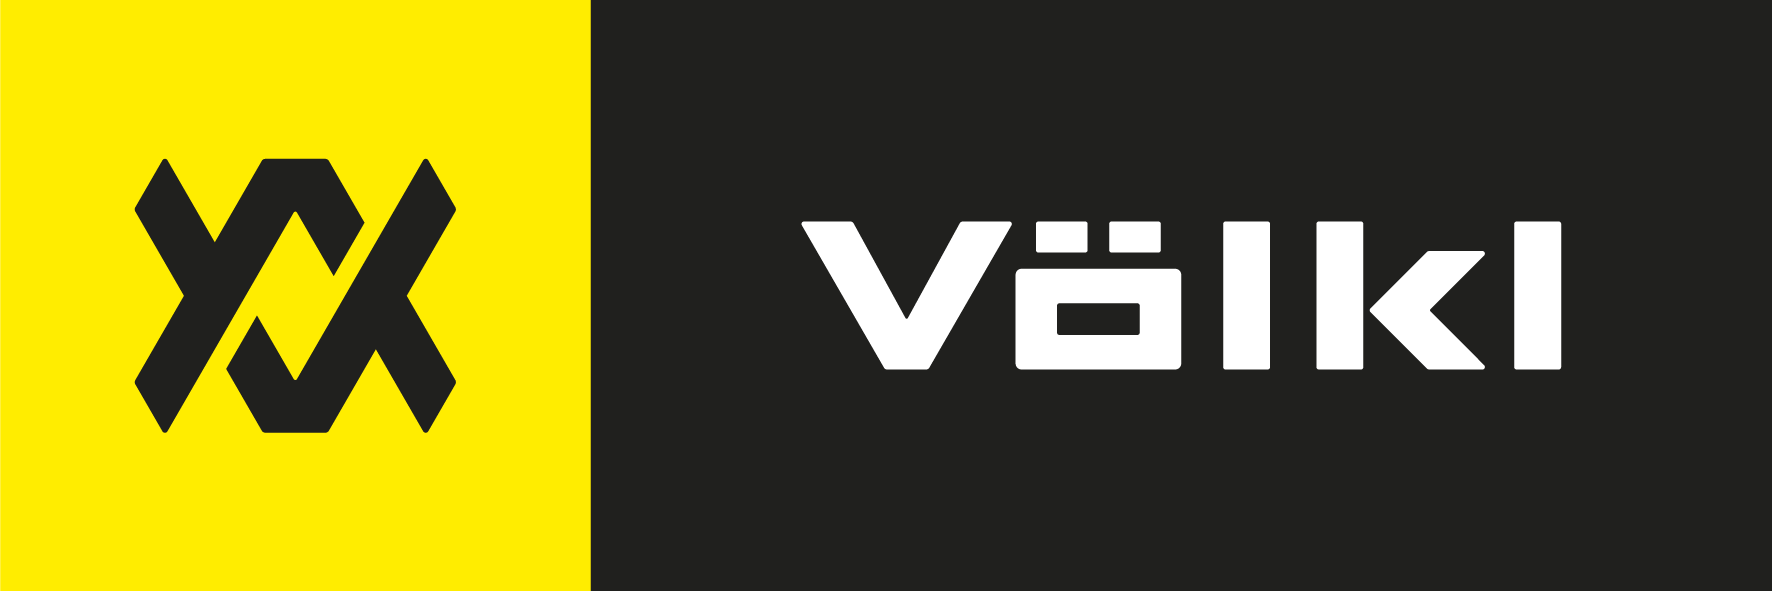 Völkl Vertriebs- GmbH